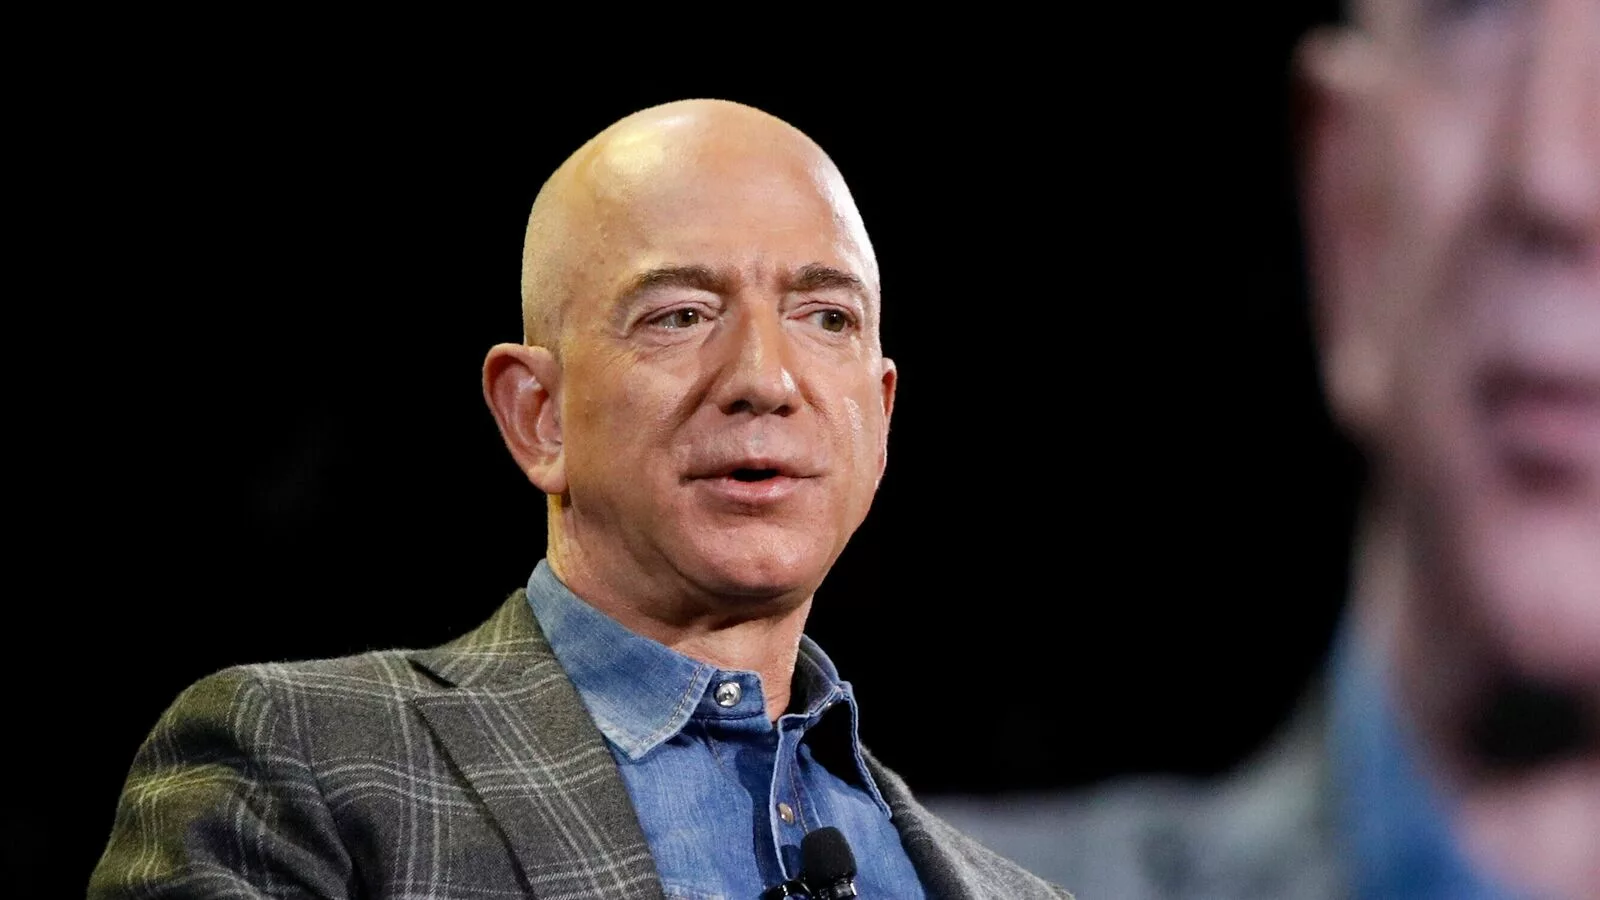 Jeff Bezos sells 24 million Amazon shares worth over $4 billion in 4 trading days